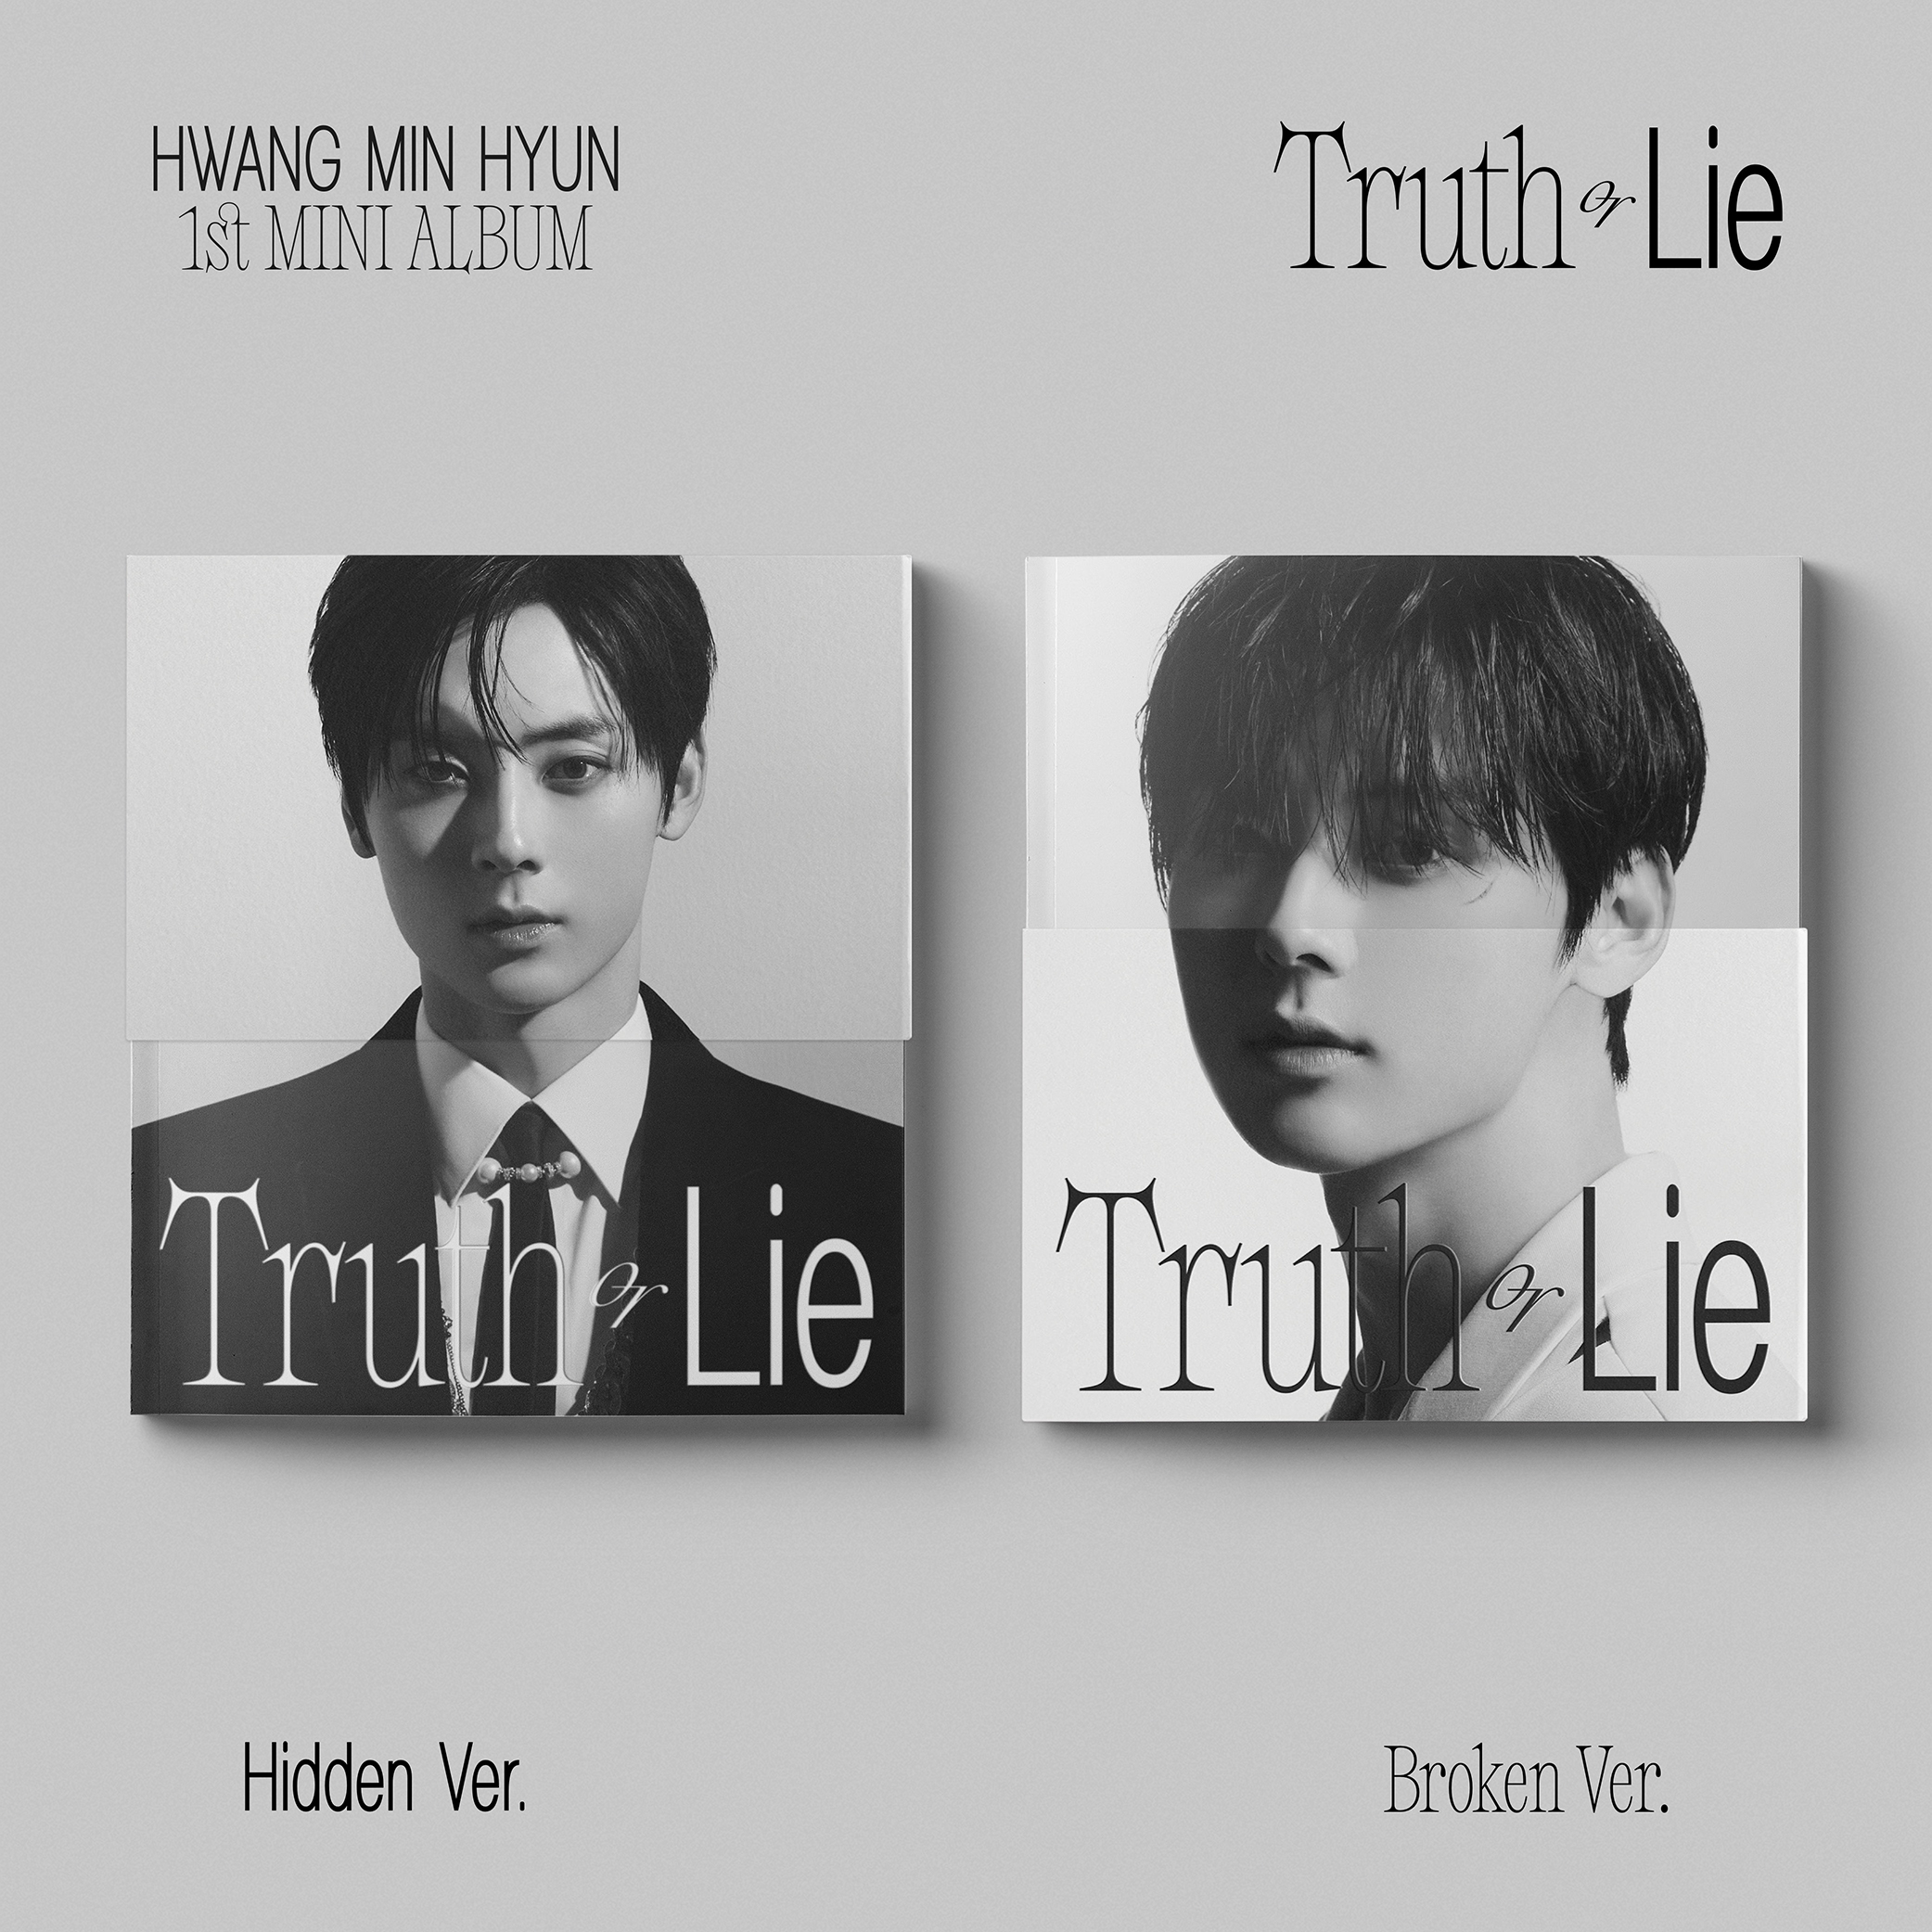 [全款 裸专] [Ktown4u Special Gift] [2CD 套装] HWANG MIN HYUN - 迷你1辑 [Truth or Lie] (Hidden Ver. + Broken Ver.) _黄旼炫观星台Observatory89